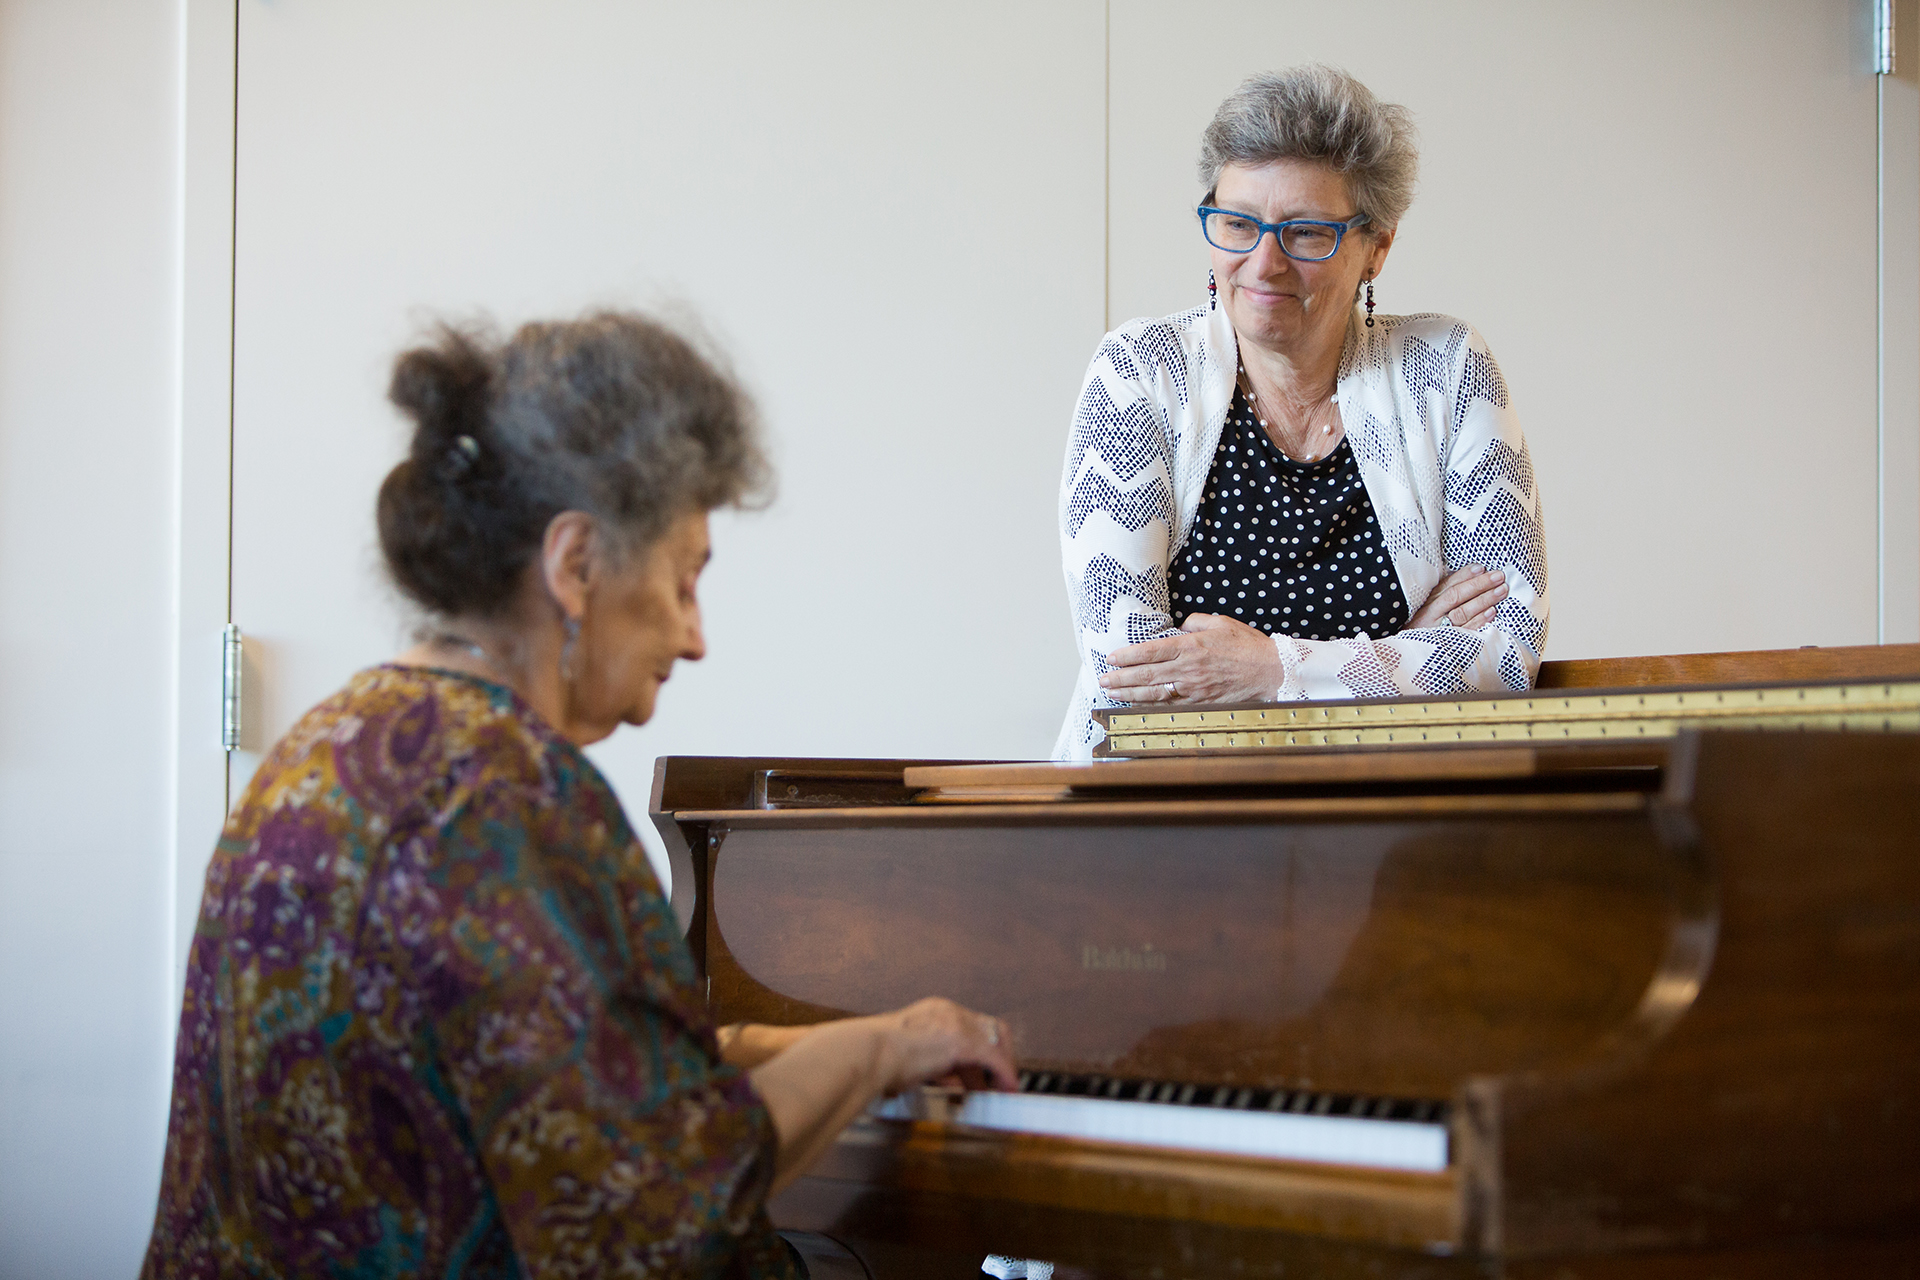 At 2Life Communities, Amy Schectman watches Tatyana Faynberg playing the piano